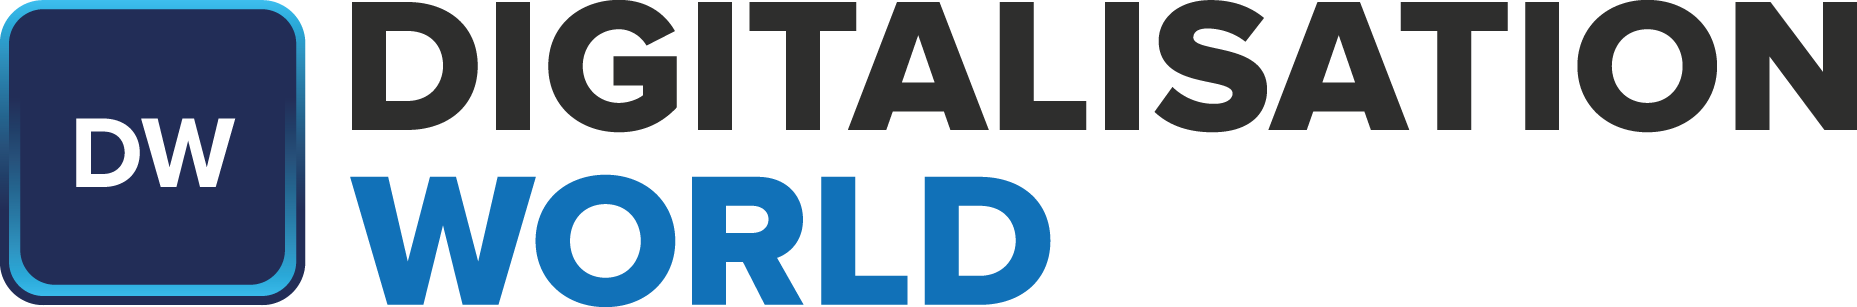 Digitalisation World logo